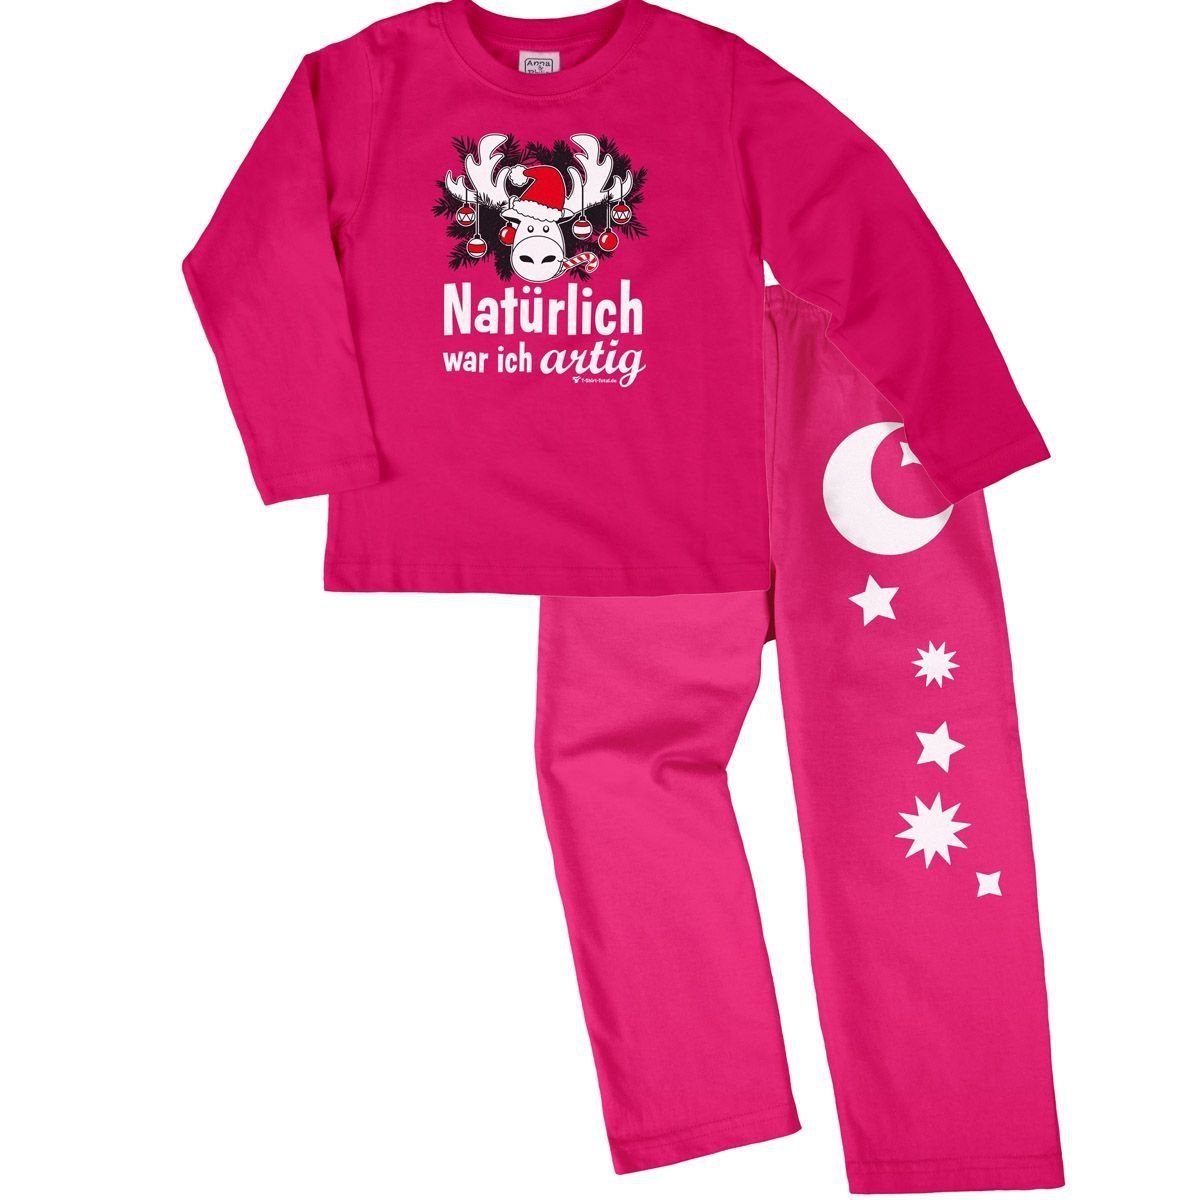 Natürlich artig Pyjama Set pink / pink 68 / 74